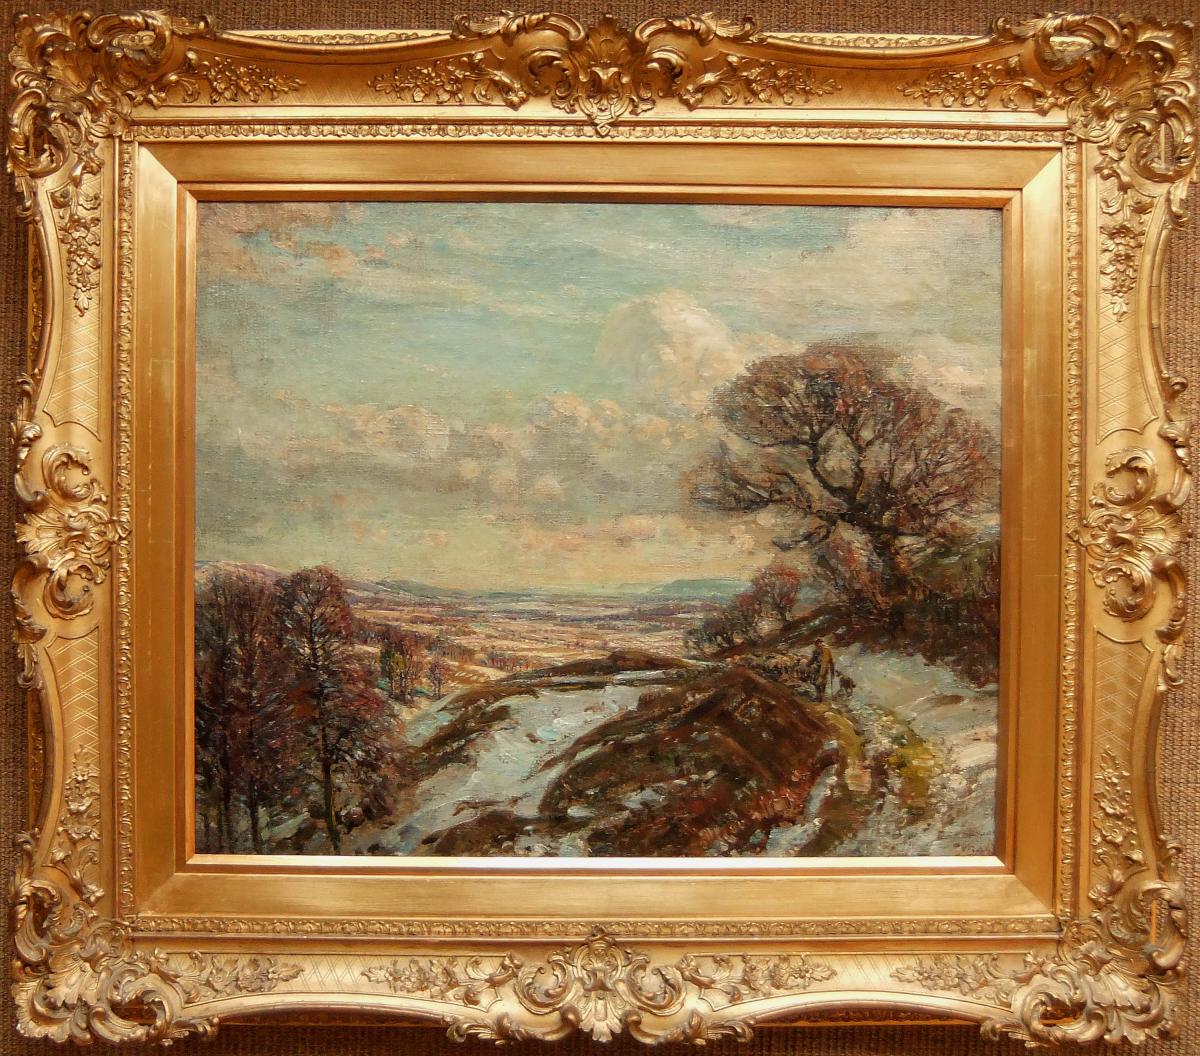 Herbert Royle oil painting landscape Wharfedale Yorkshire